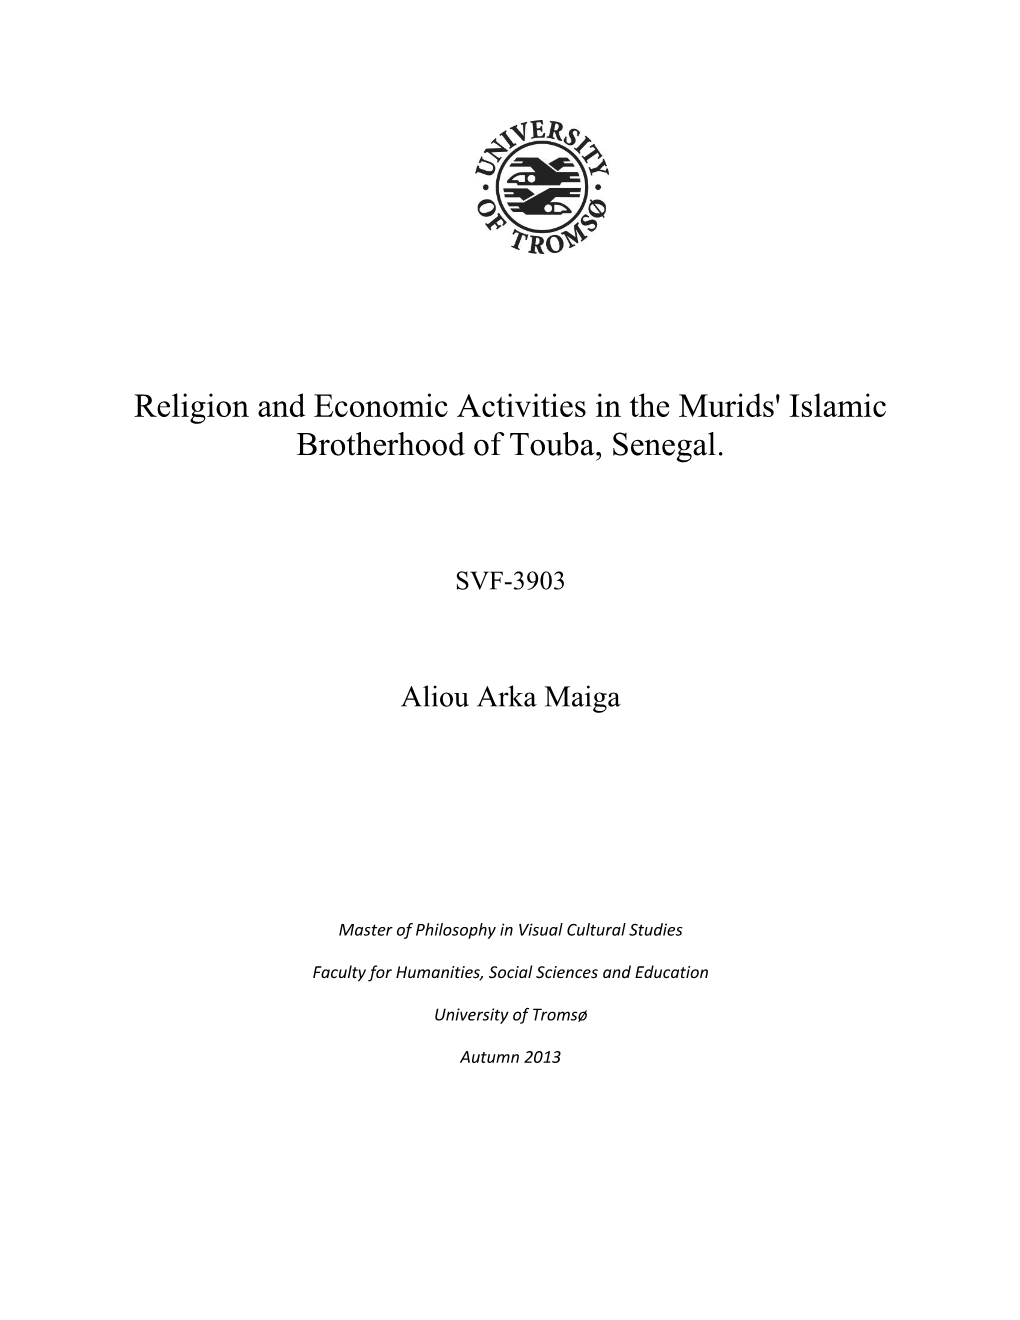 Religion and Economic Activities in the Murids' Islamic Brotherhood of Touba, Senegal